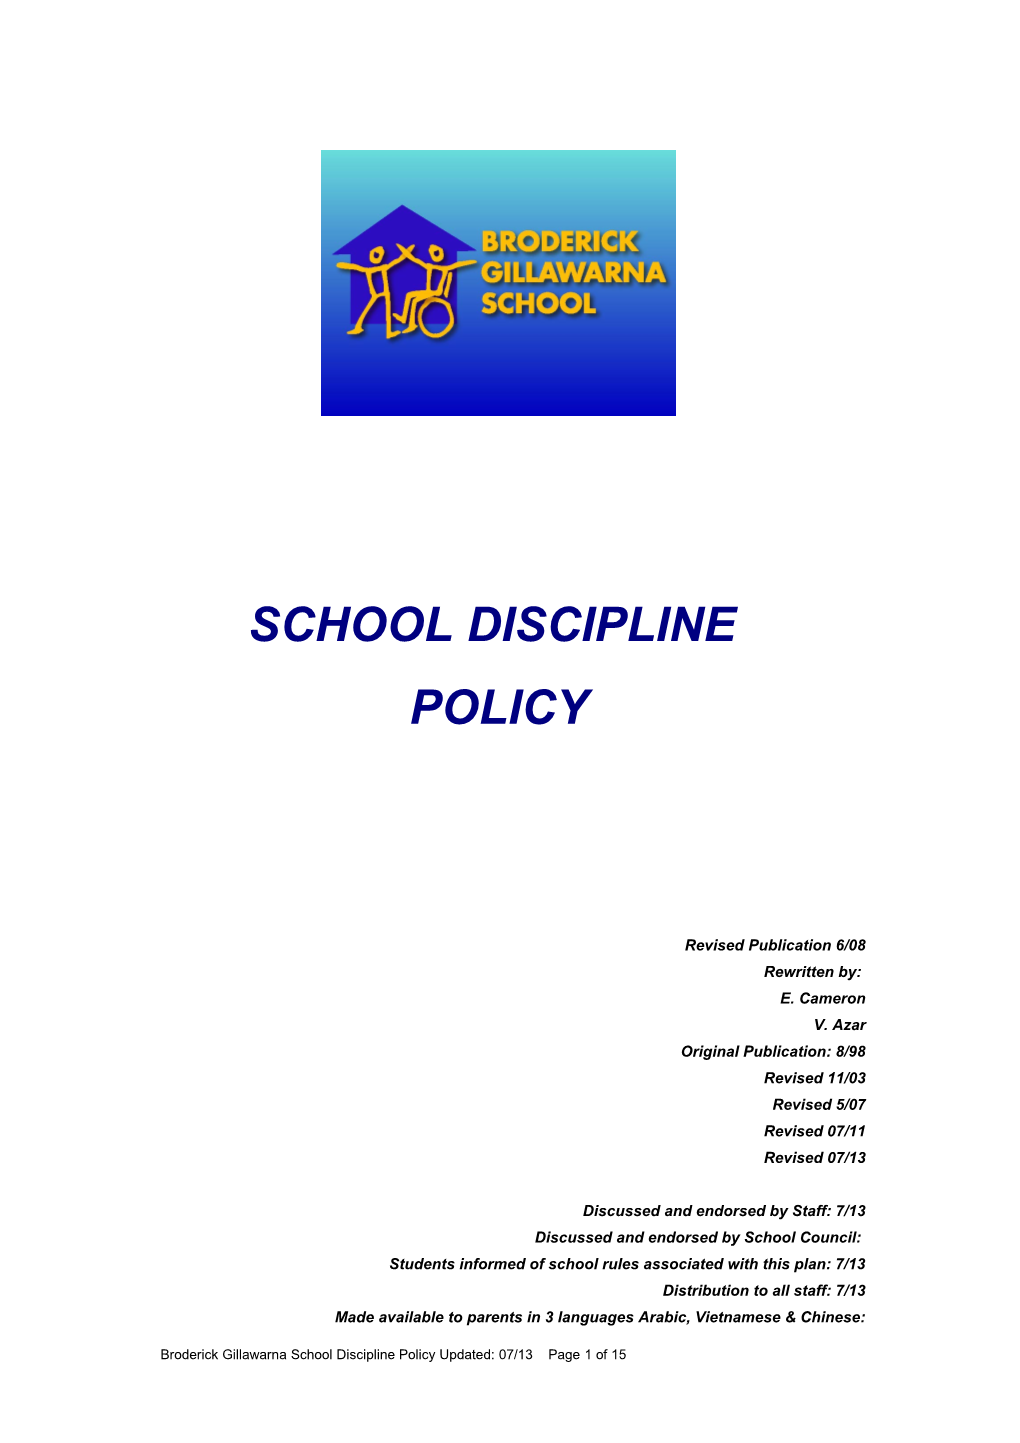 Broderick/Gillawarna Discipline Policy